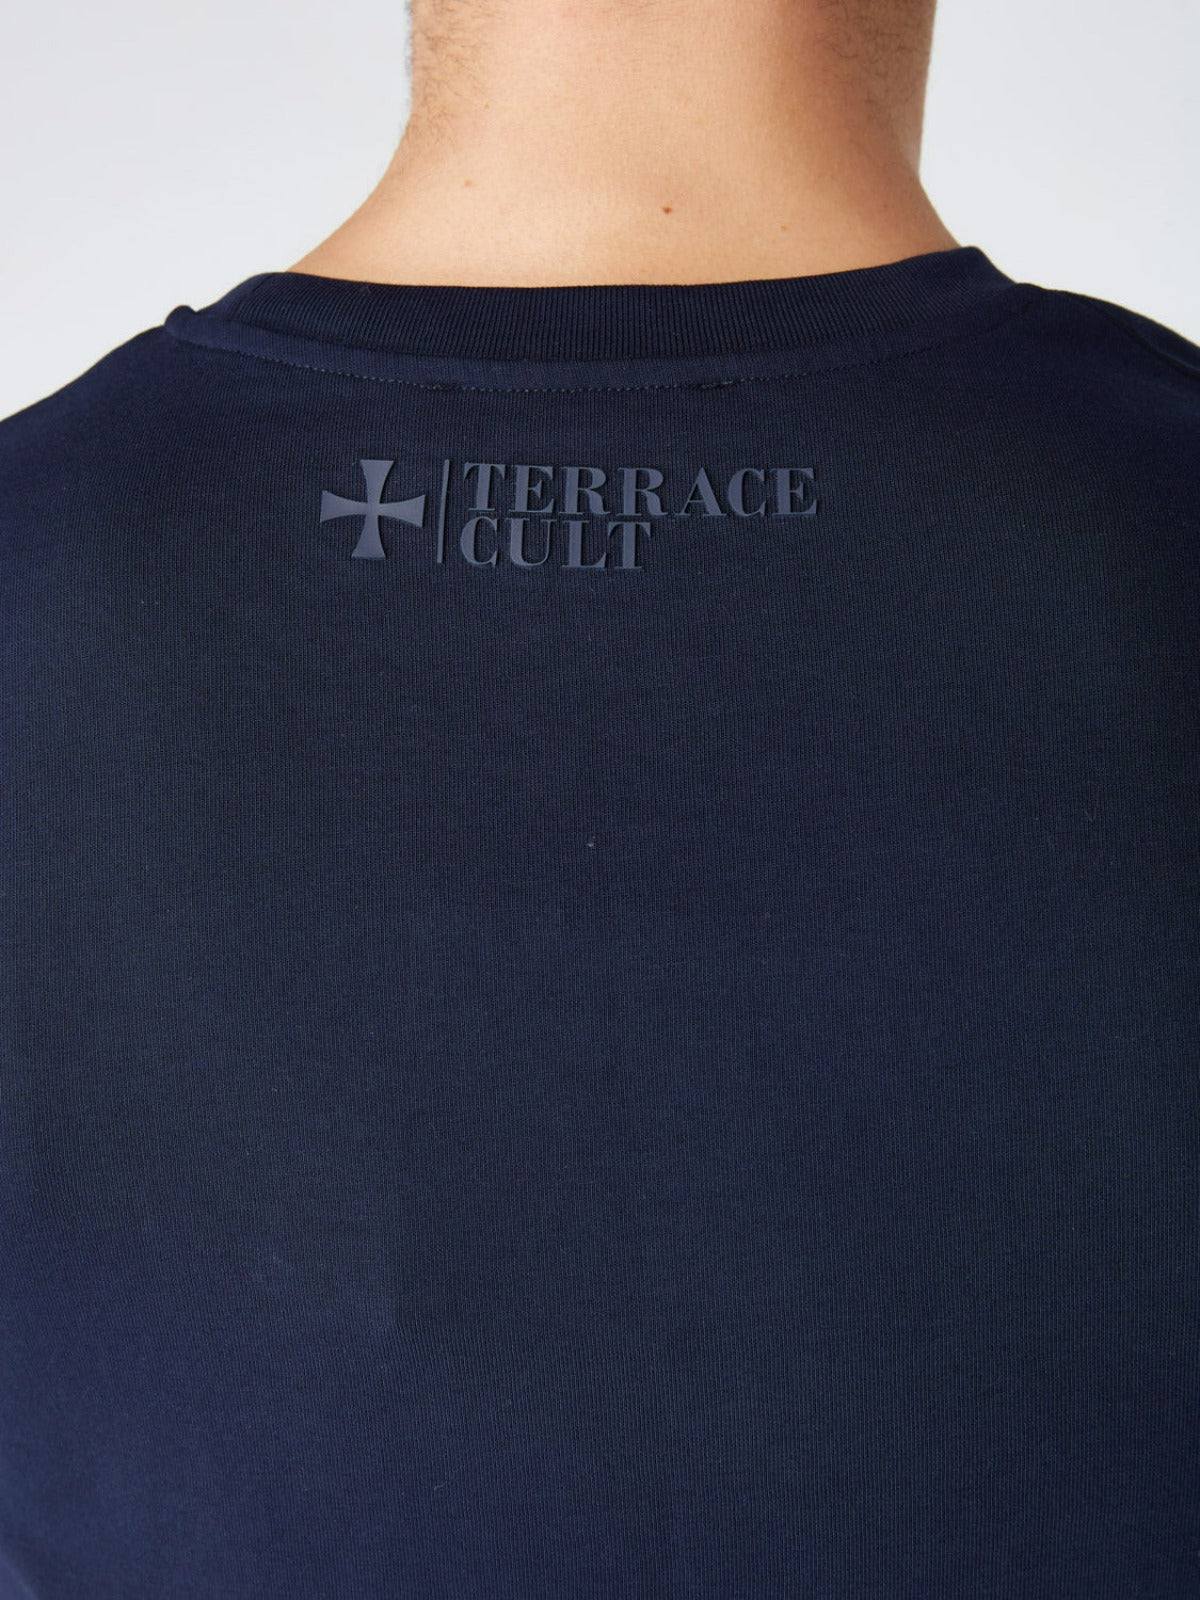 Terrace Cult Pocket Tee :: Navy